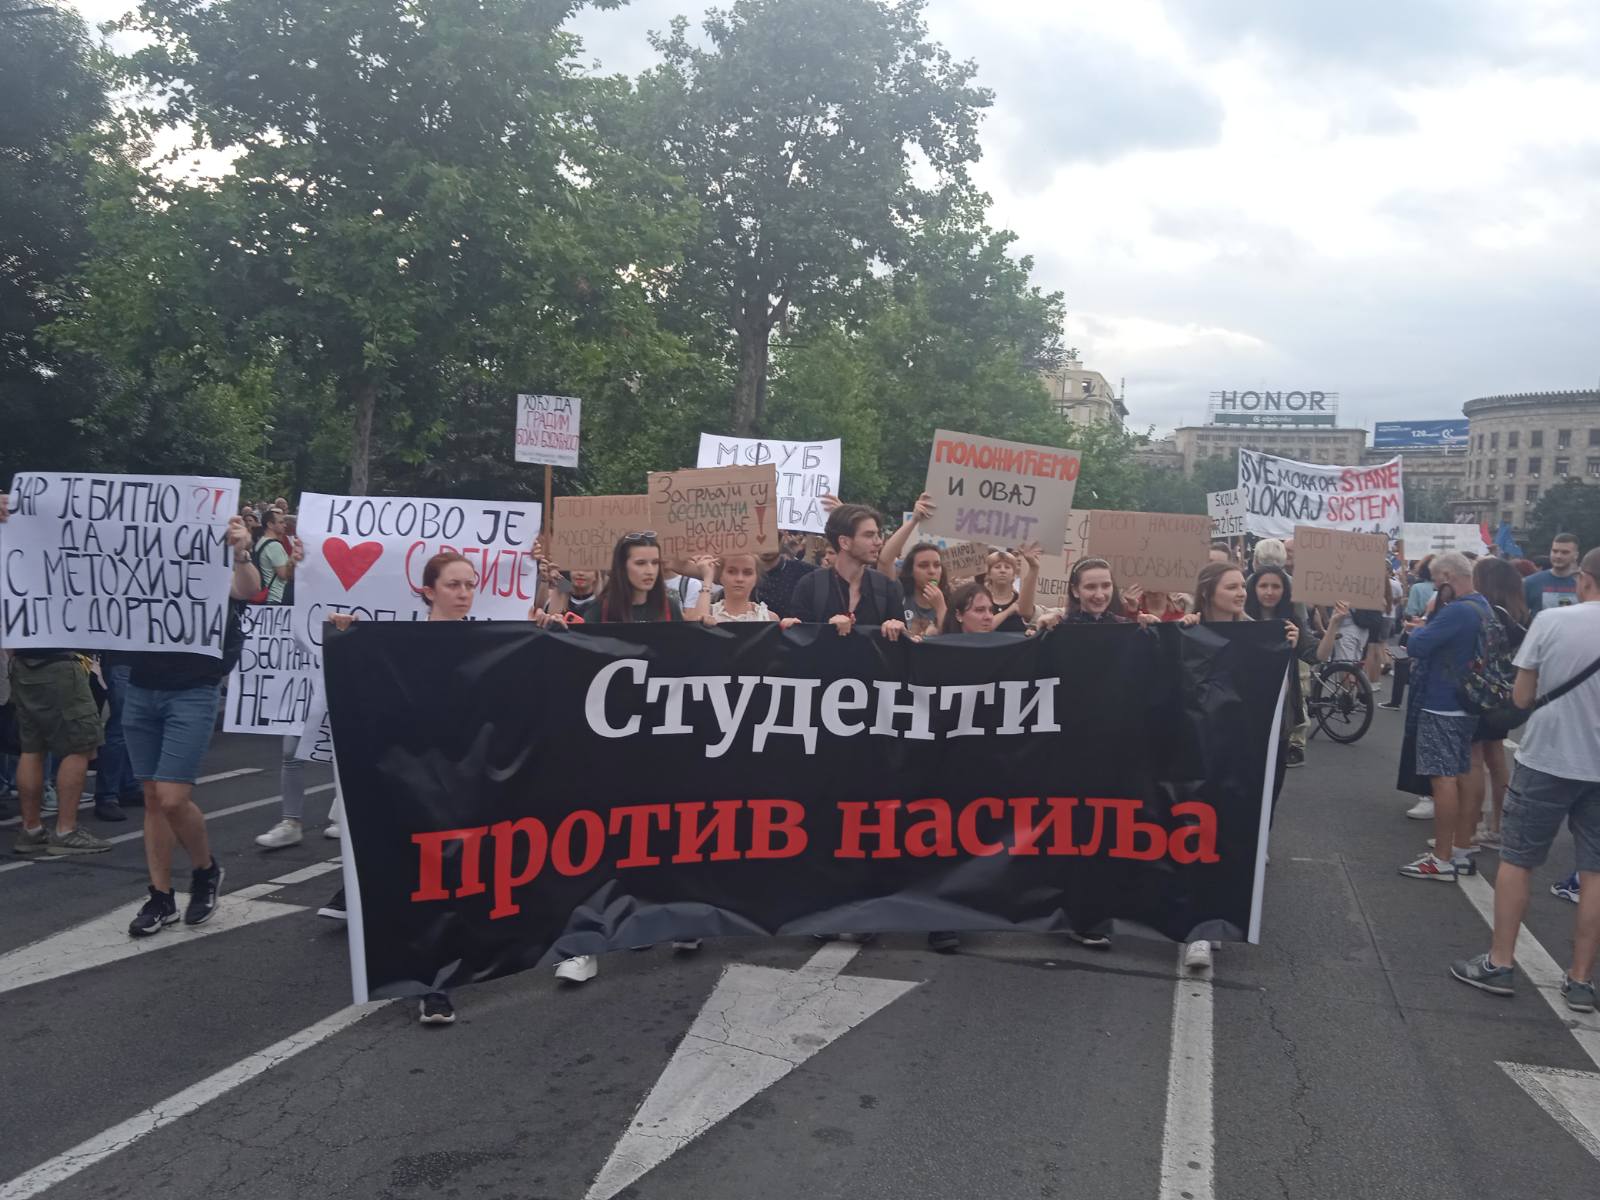 Protest "Srbija protiv nasilja" u preko 10 gradova obeležile šetnje, blokade puteva i zahtevi za ostavkama (FOTO, VIDEO) 74